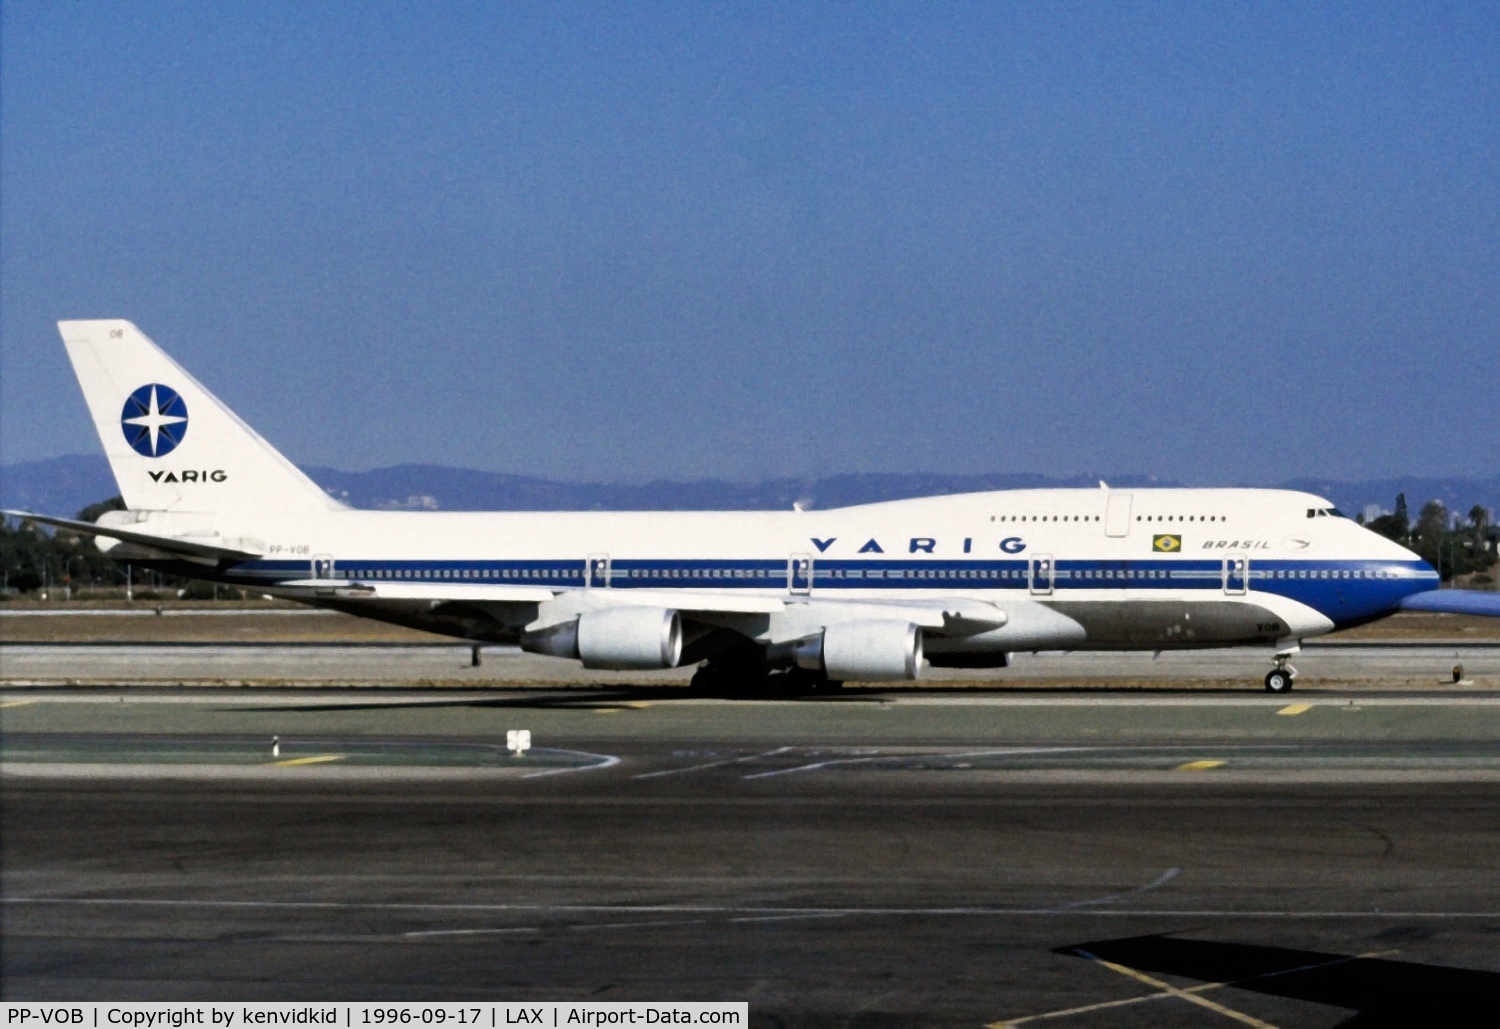 PP-VOB, 1988 Boeing 747-341 C/N 24107, Copied from slide.